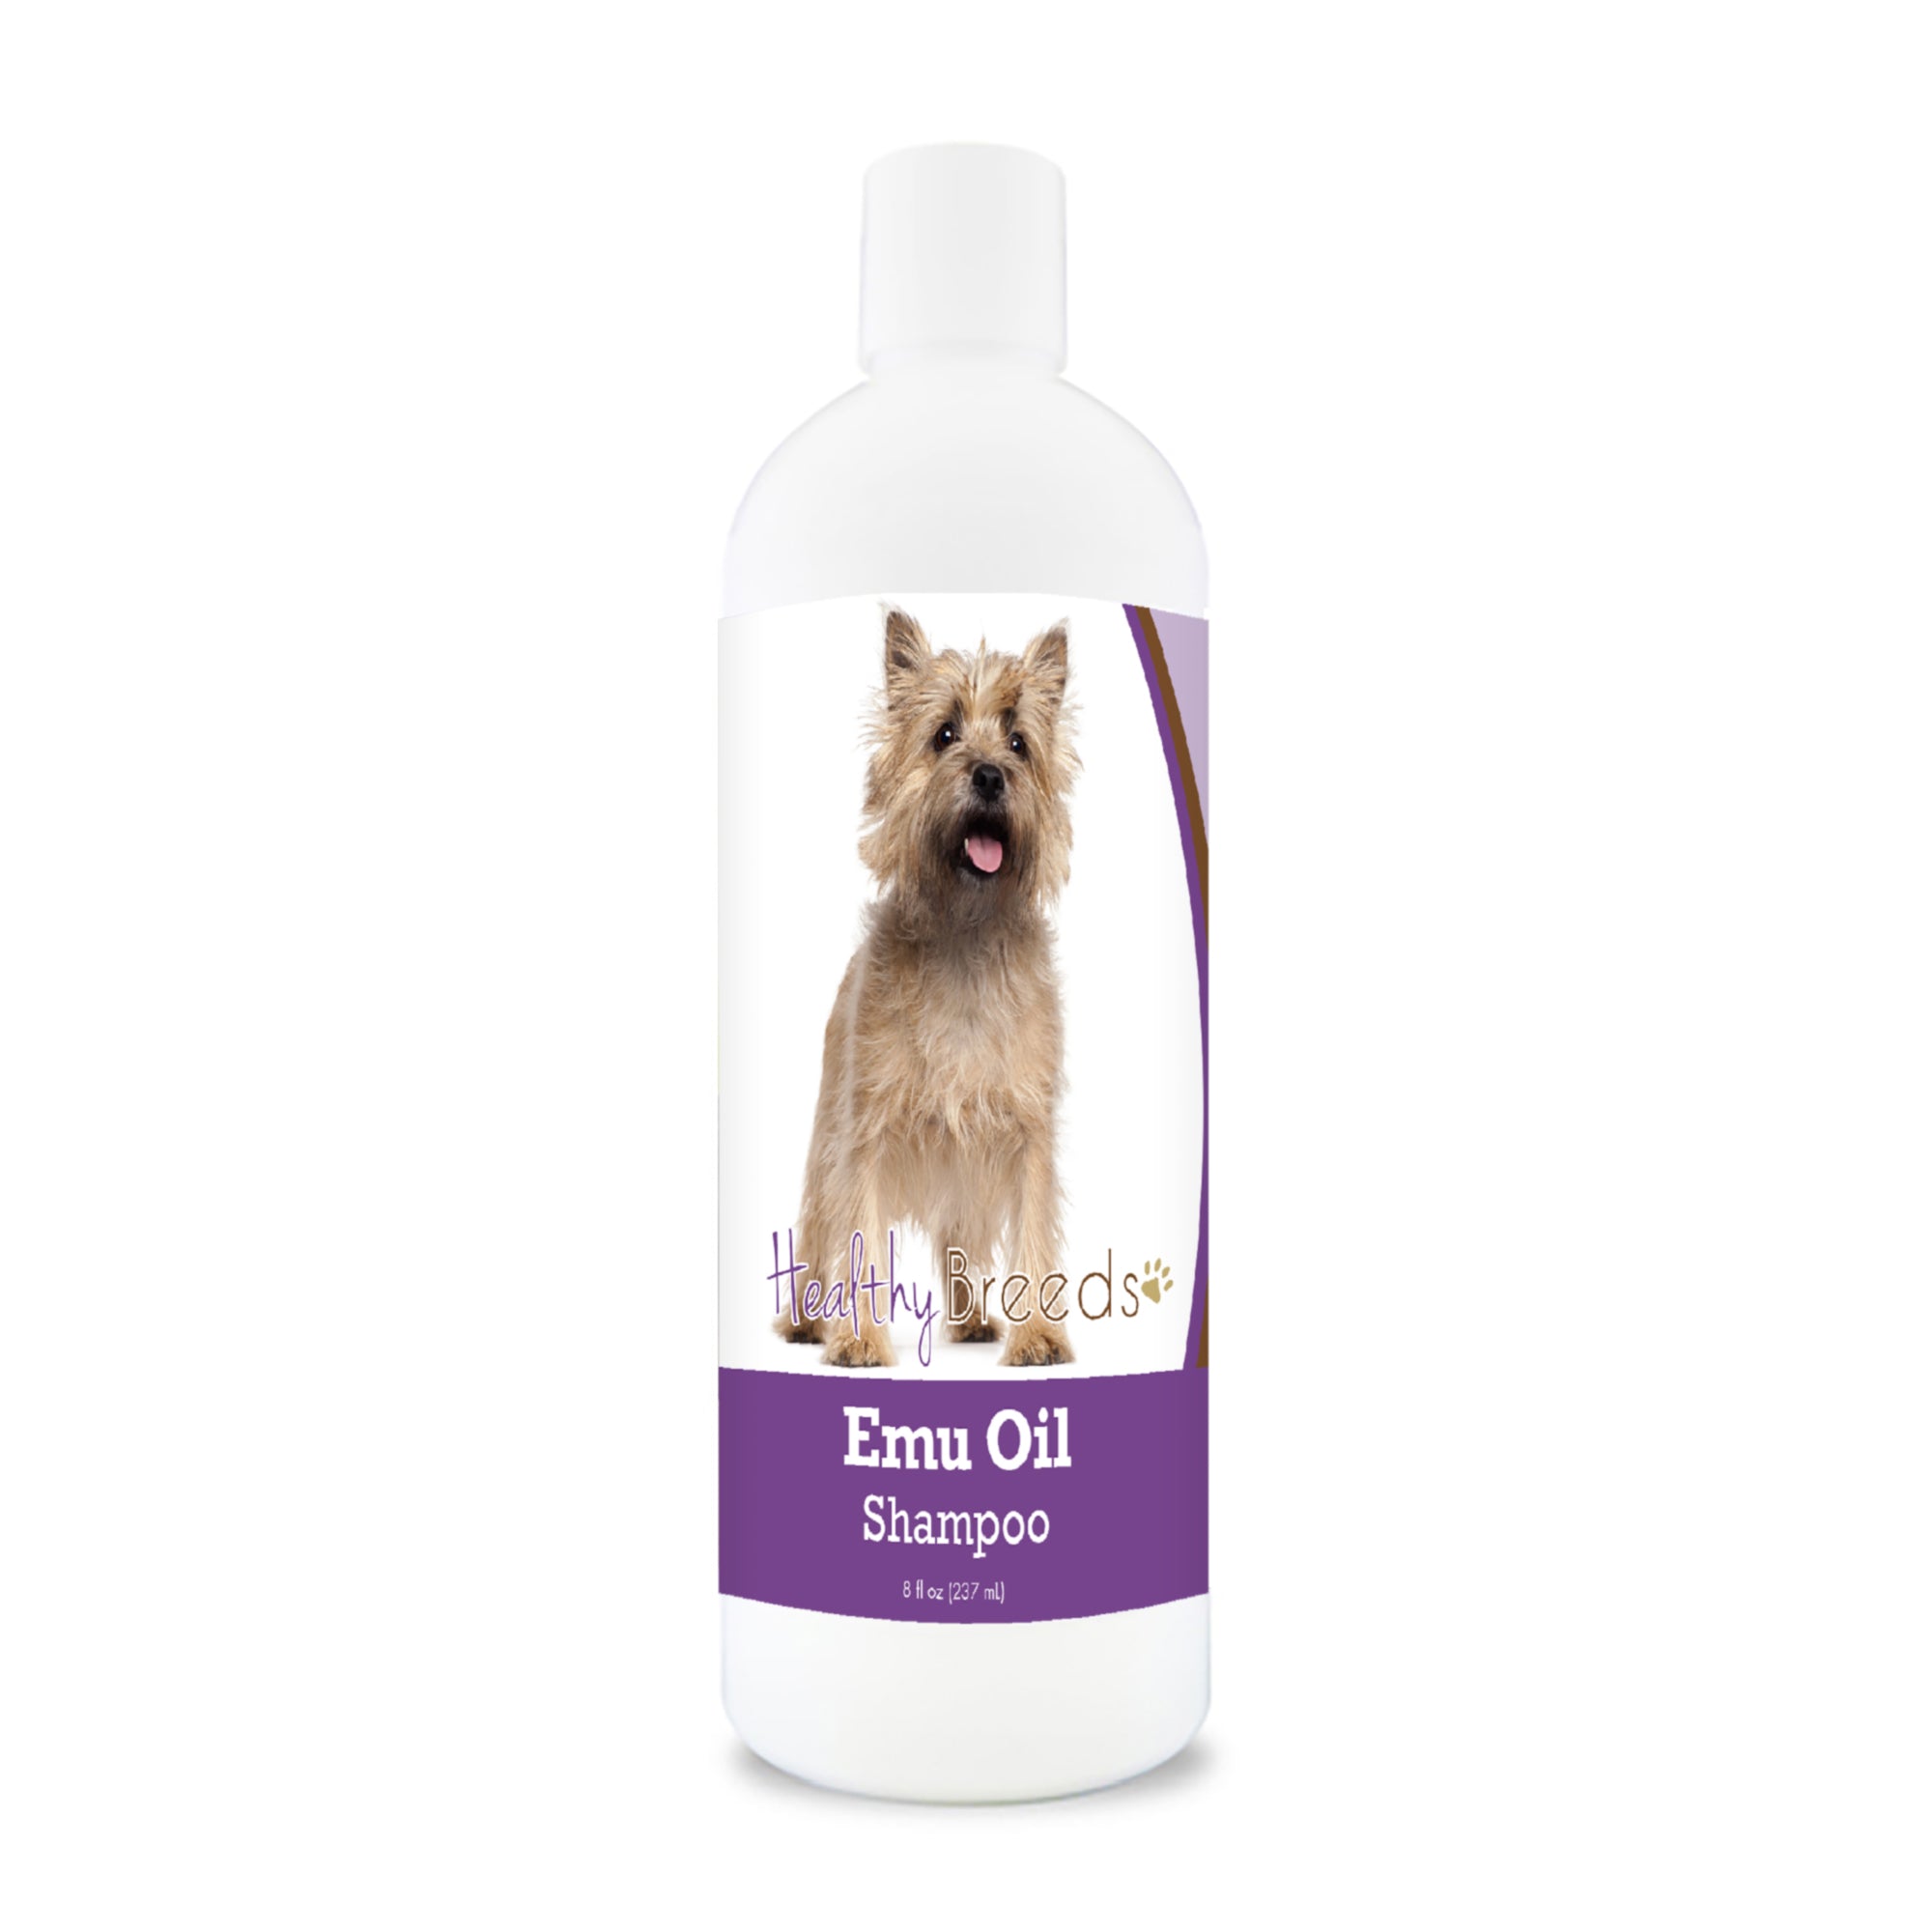 Cairn Terrier Emu Oil Shampoo 8 oz